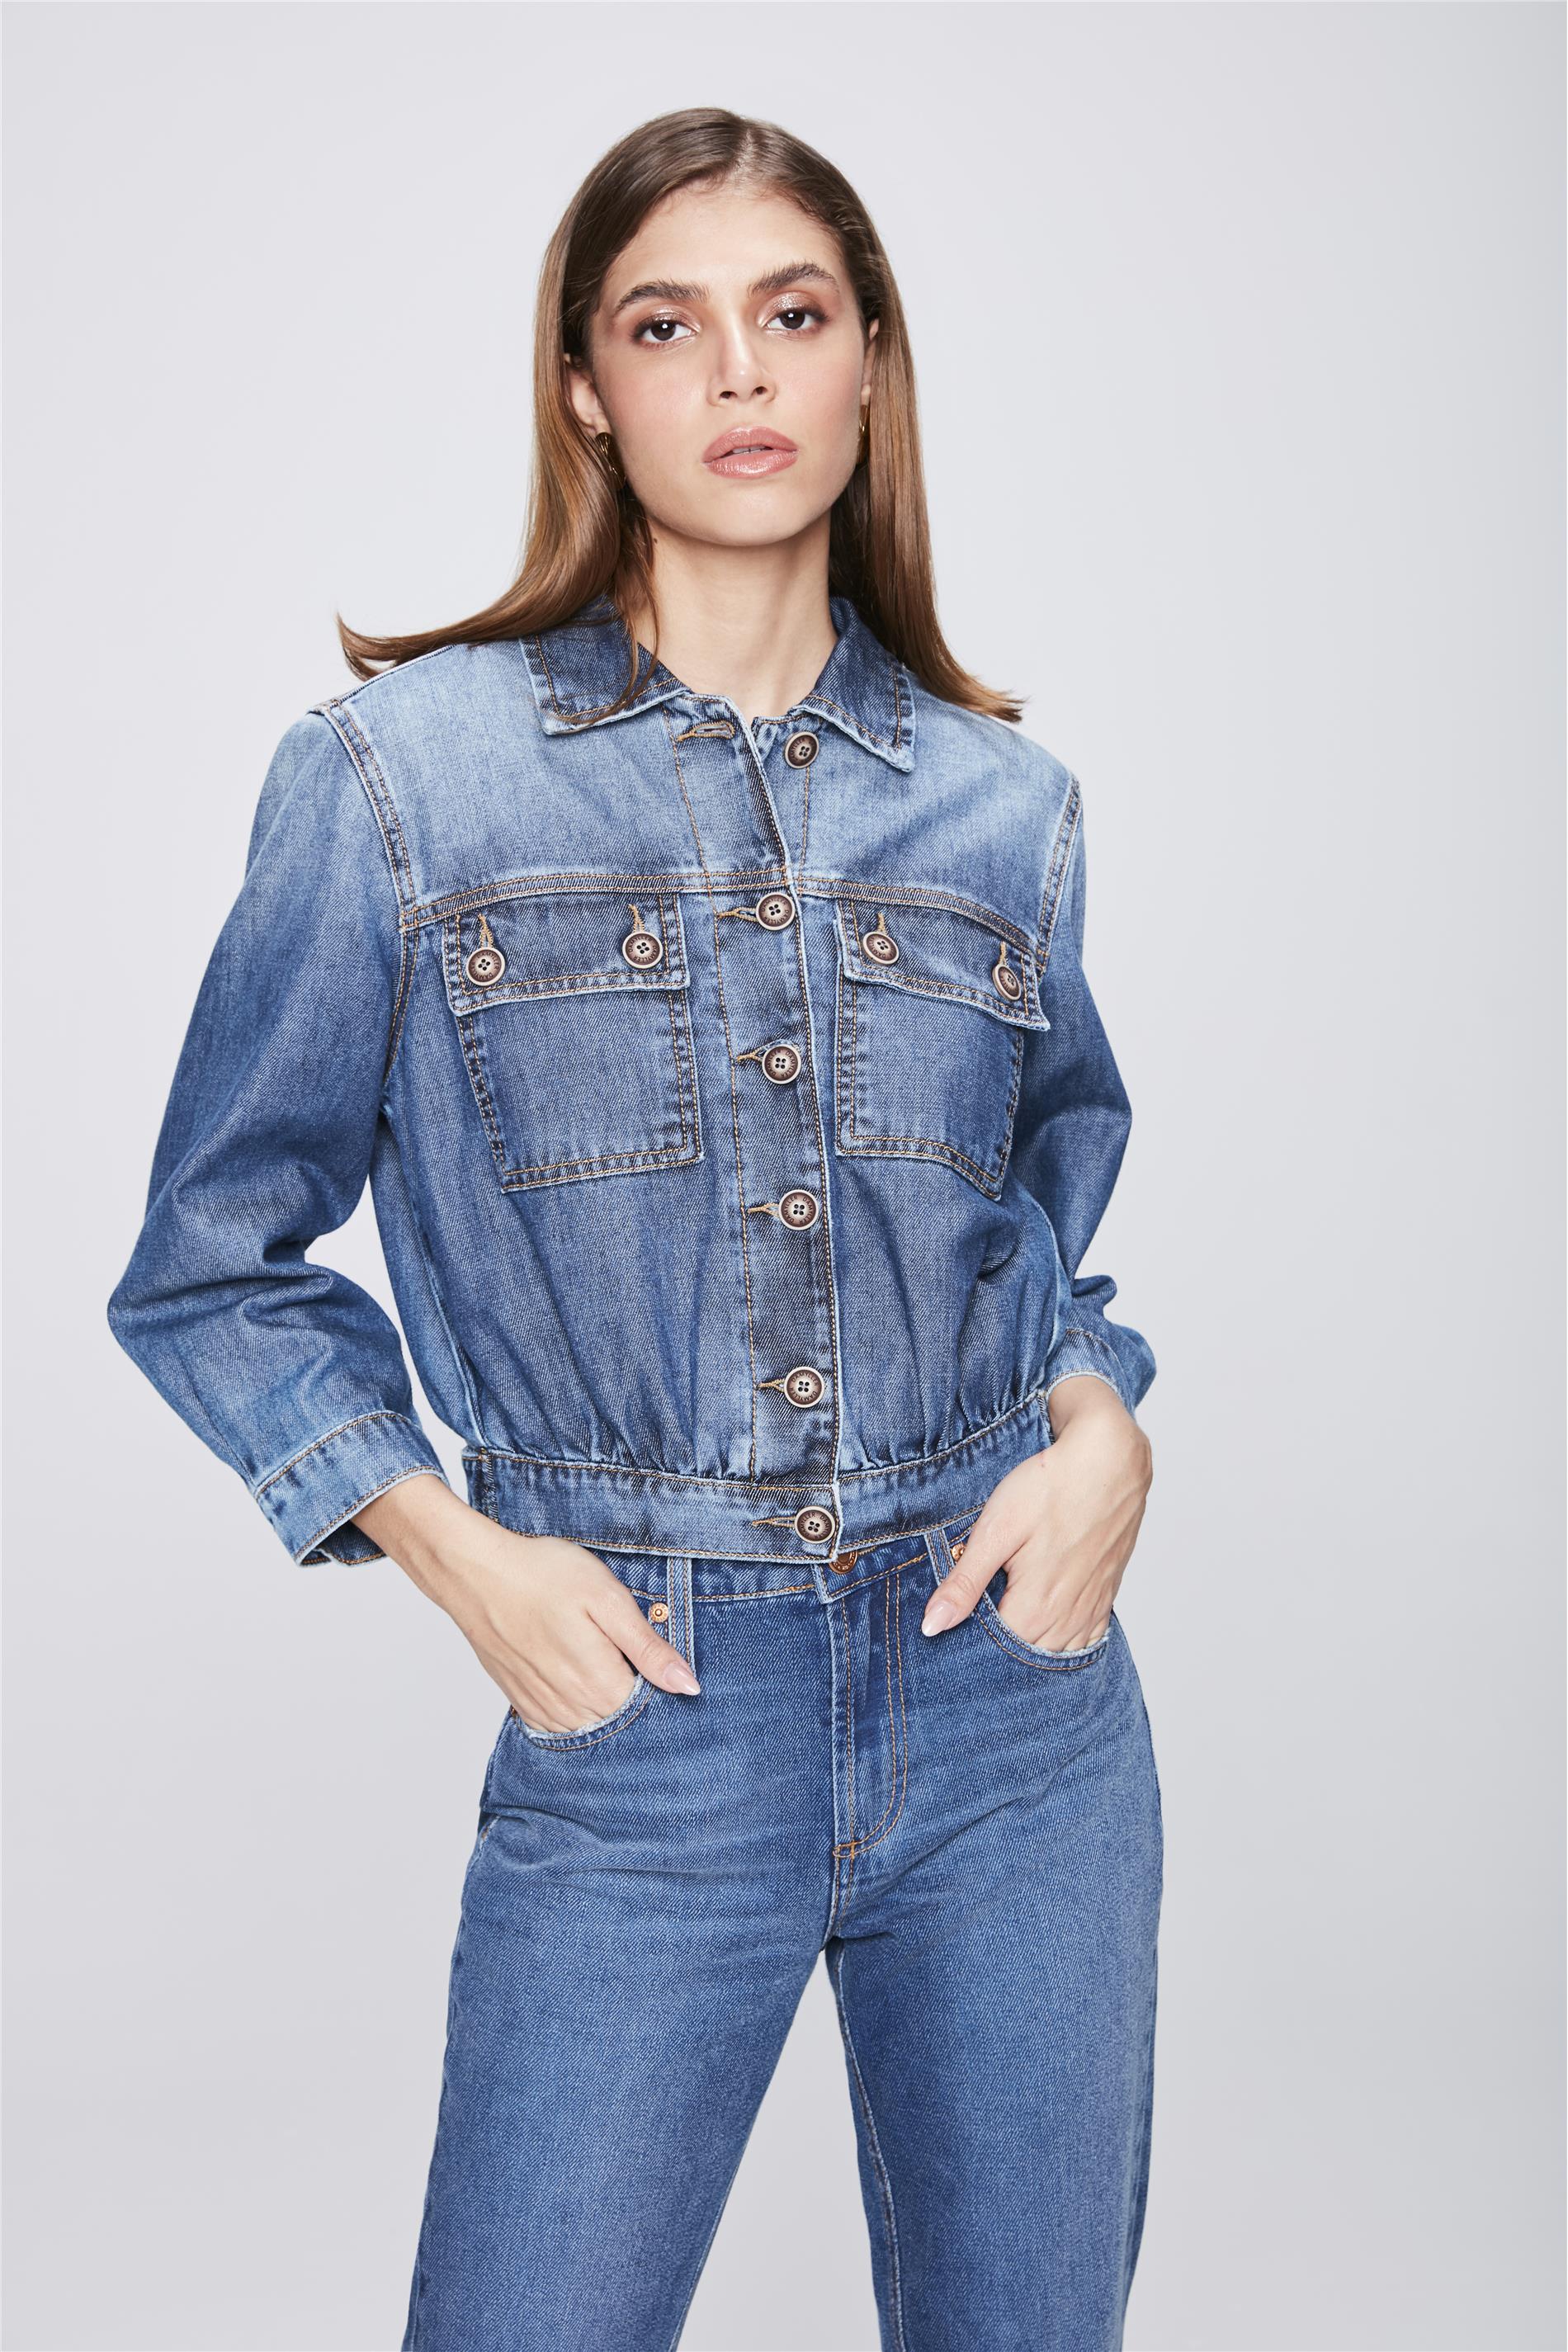 jaqueta jeans feminina damyller